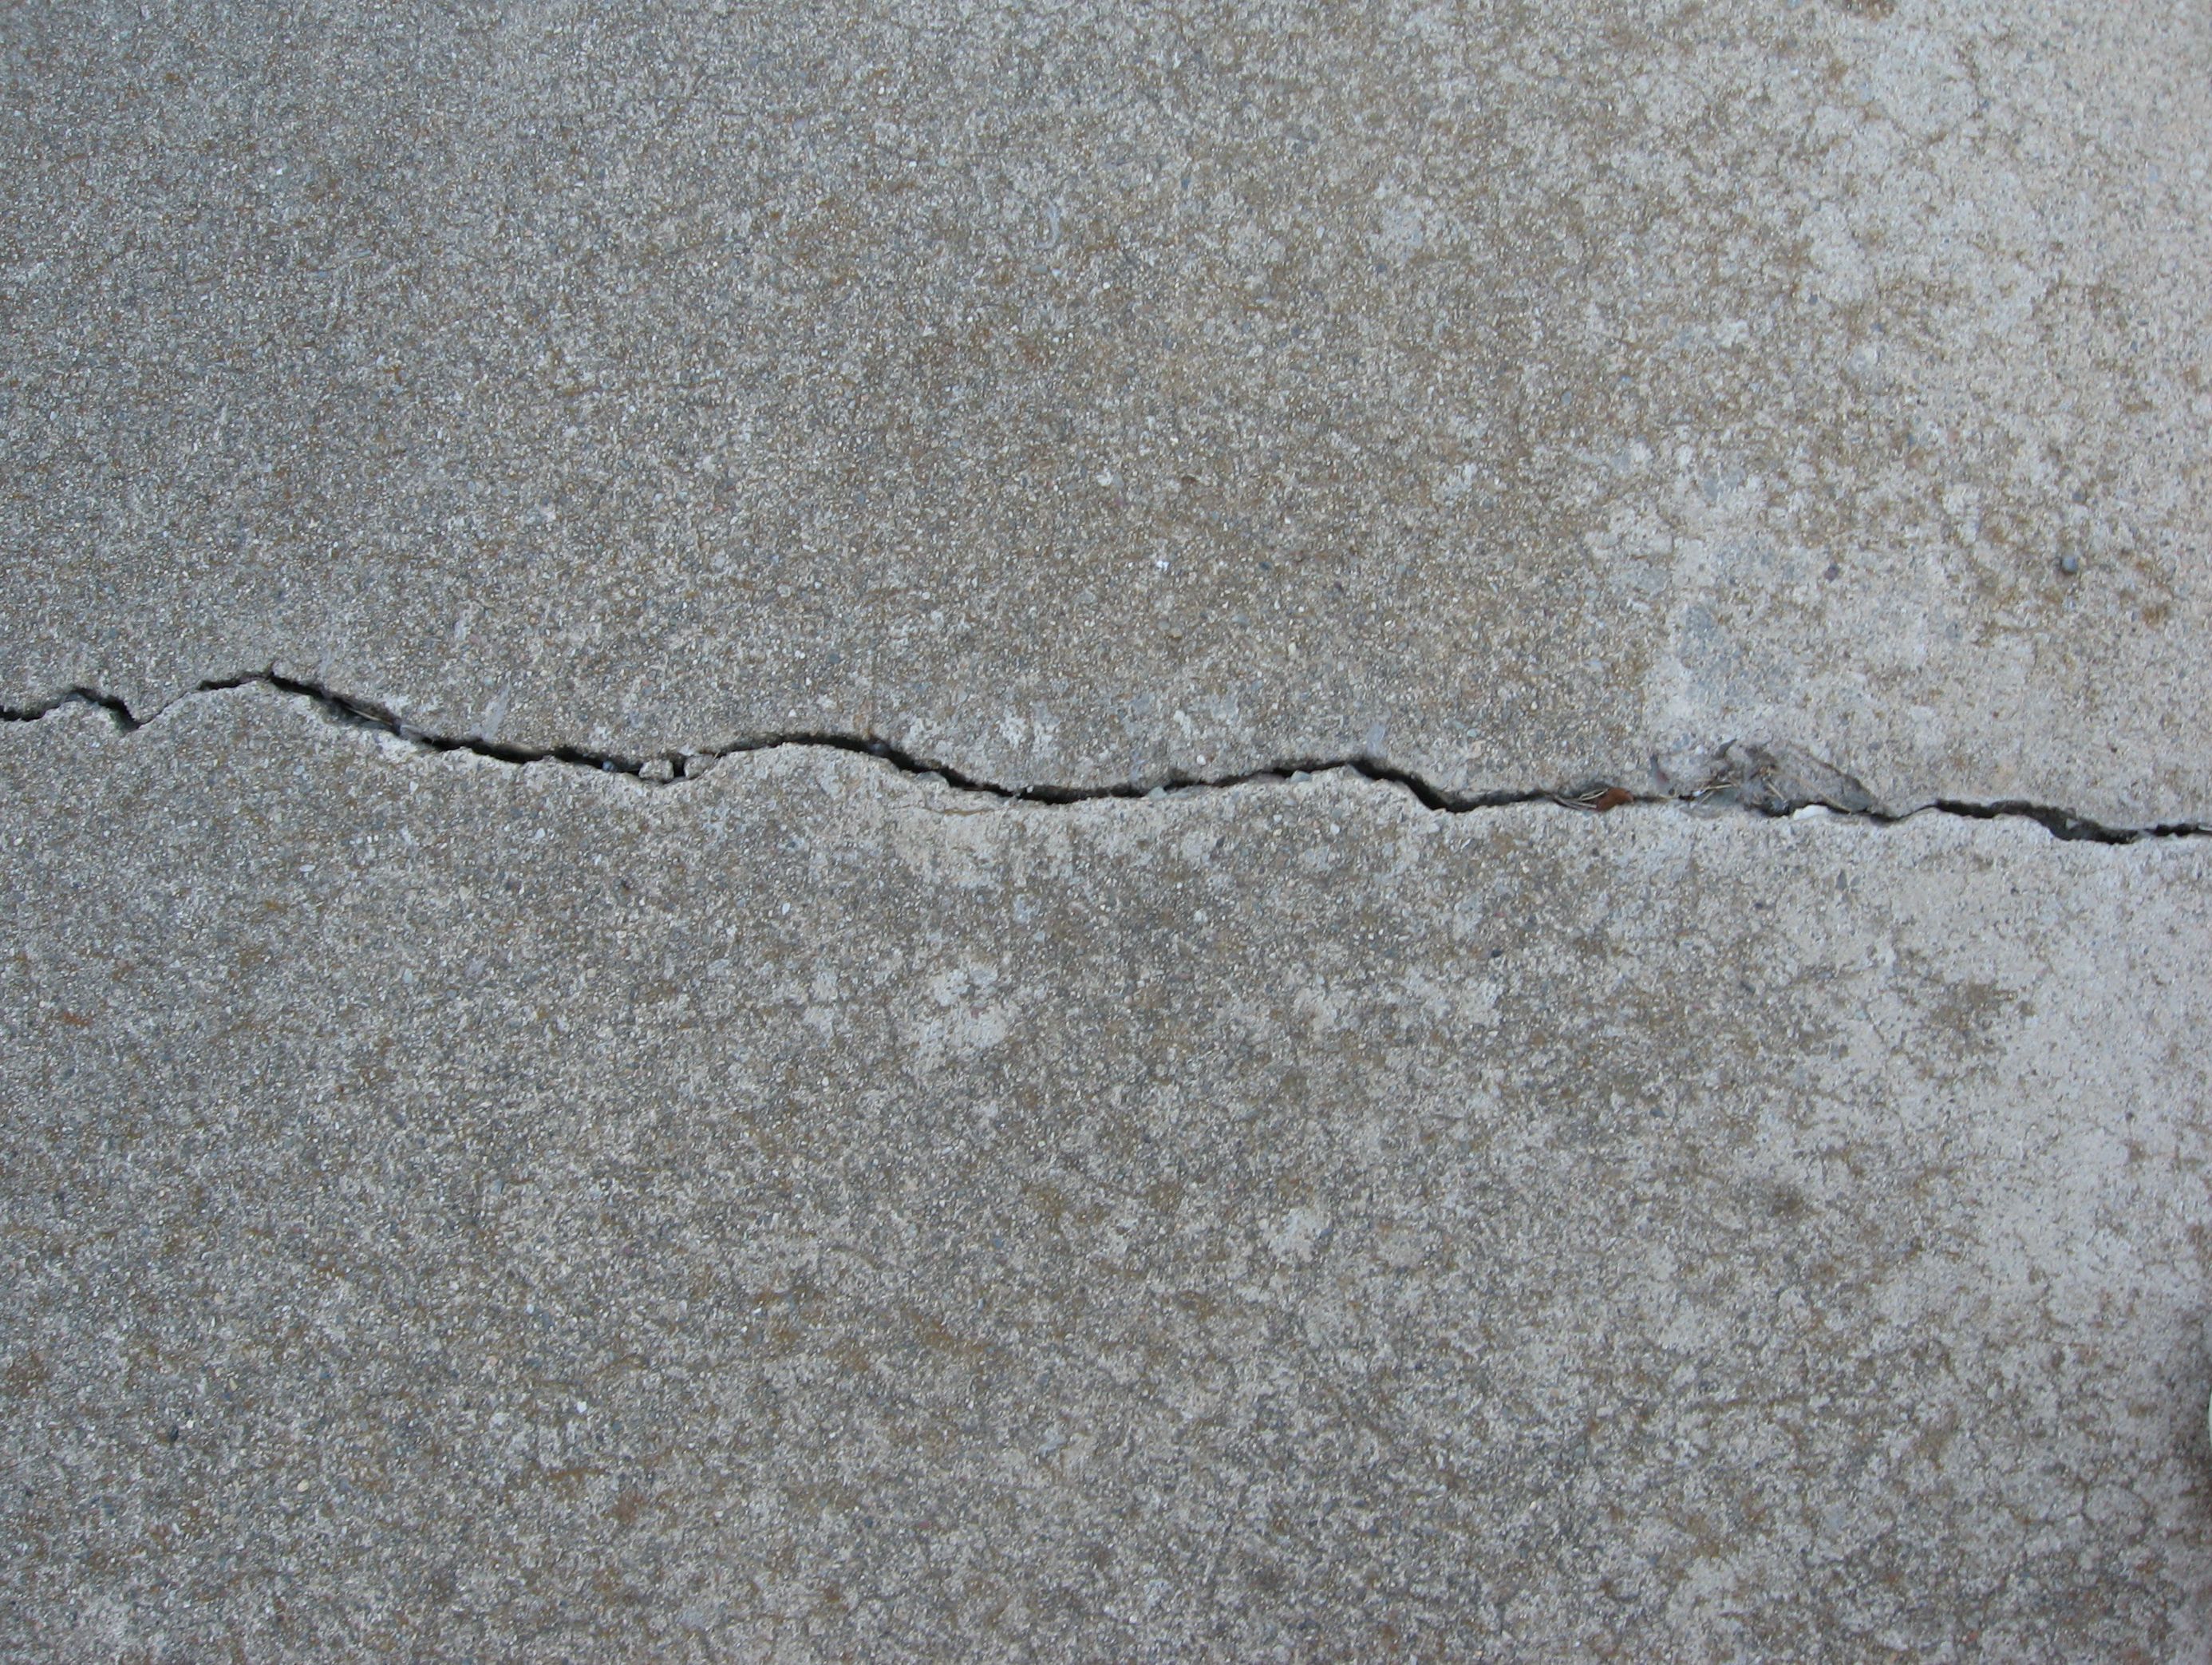 Cracked Concrete, City, Concrete, Dirty, Grunge, HQ Photo